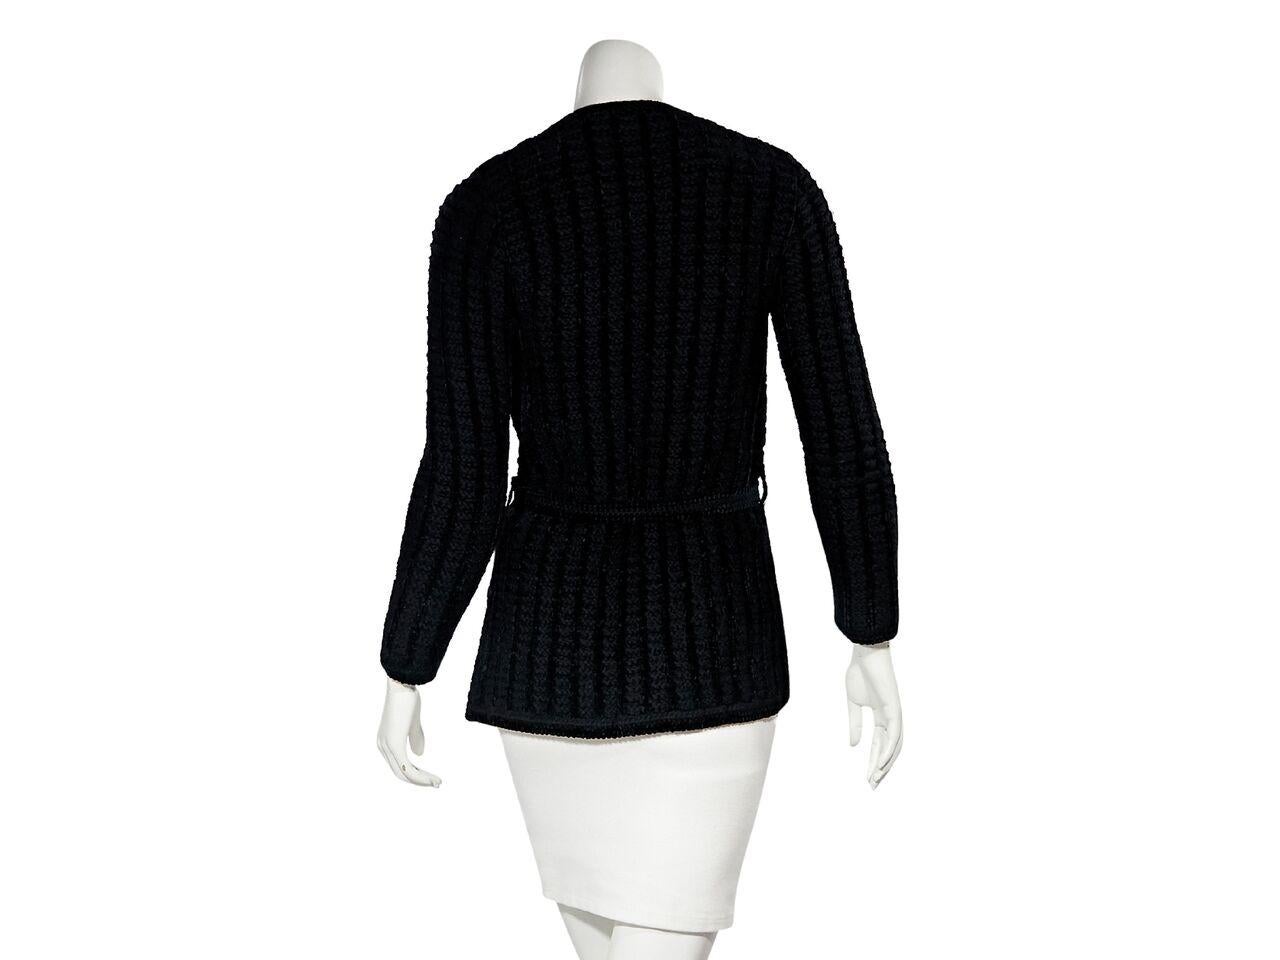 Product details:  Vintage black wool-blend knit cardigan by Yves Saint Laurent Rive Gauche.  Long sleeves.  Self-tie belt.  Waist patch pockets.  32